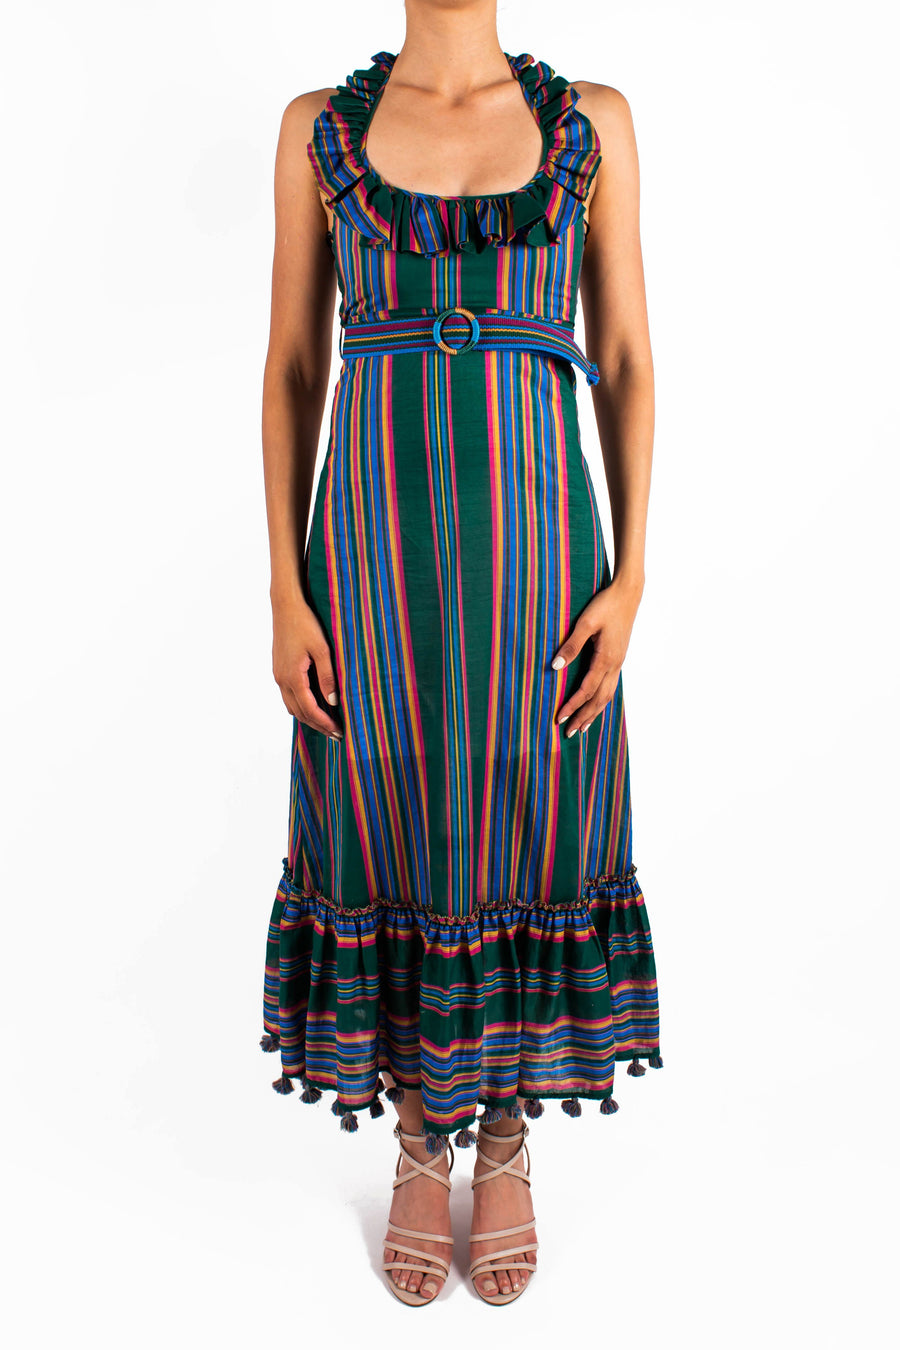 Allia Stripe Picnic Dress Front